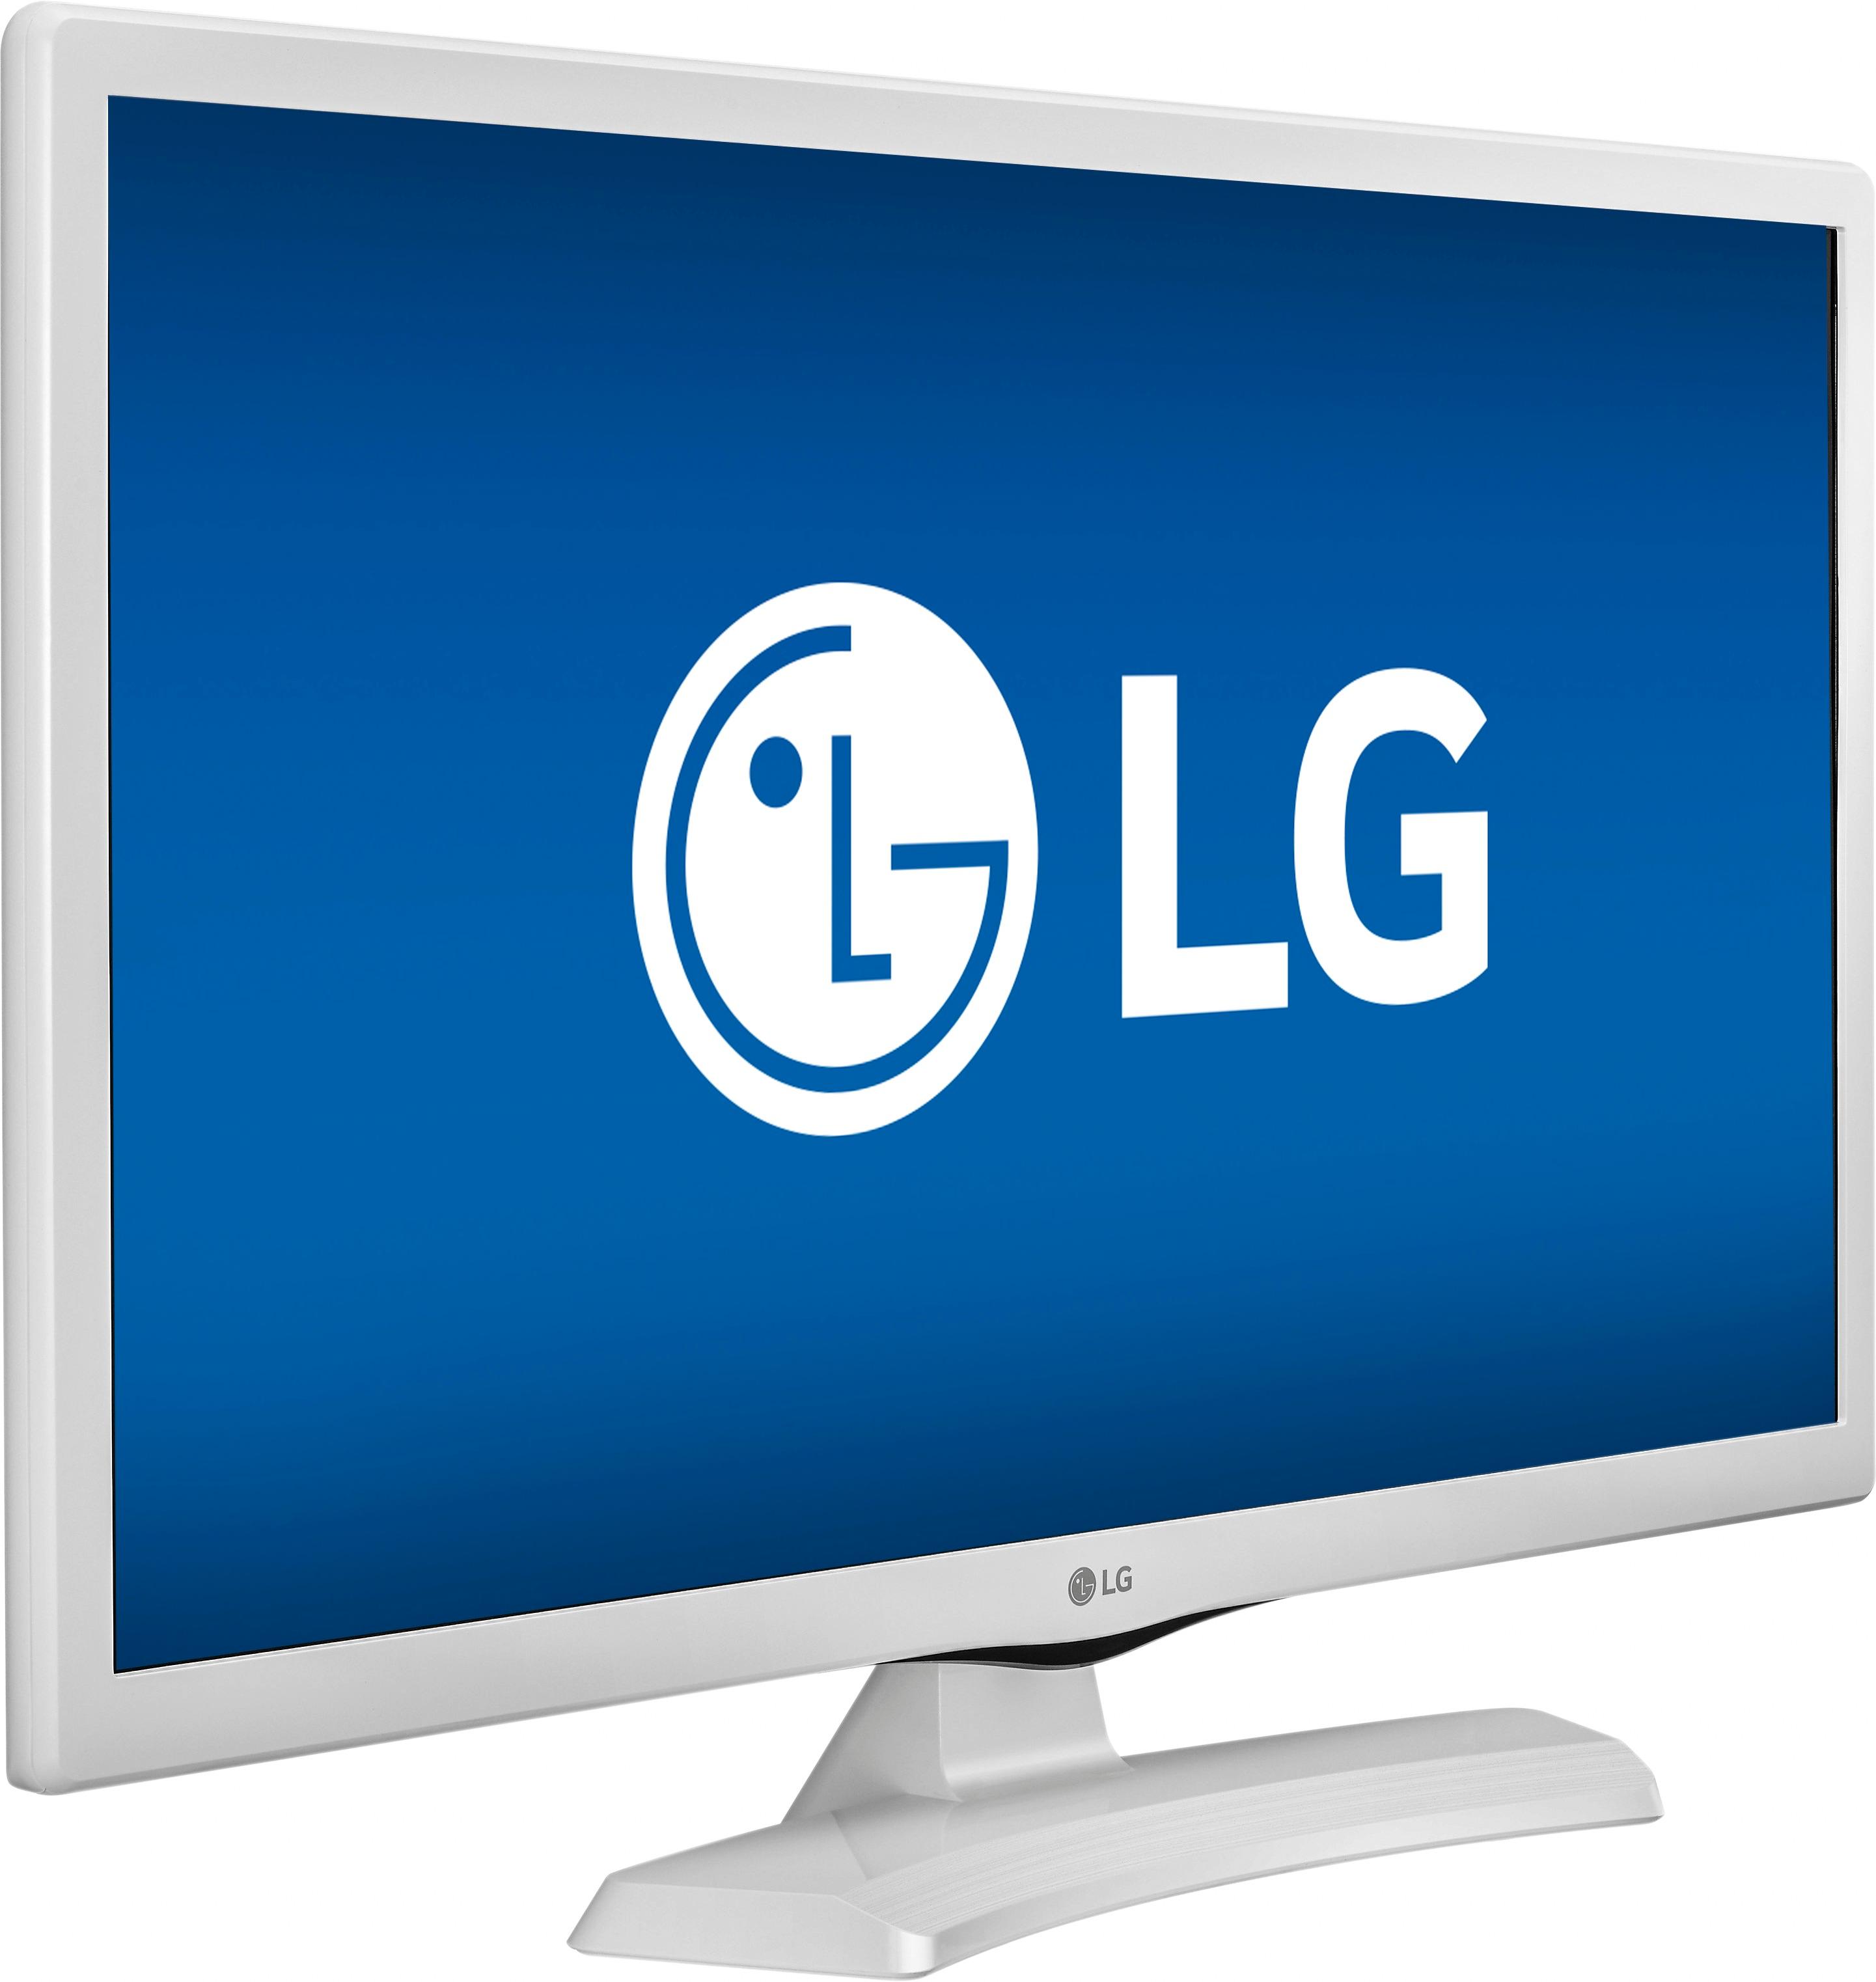 LG 24 Class LED 720p Smart HDTV 24LJ4840-WU - Best Buy